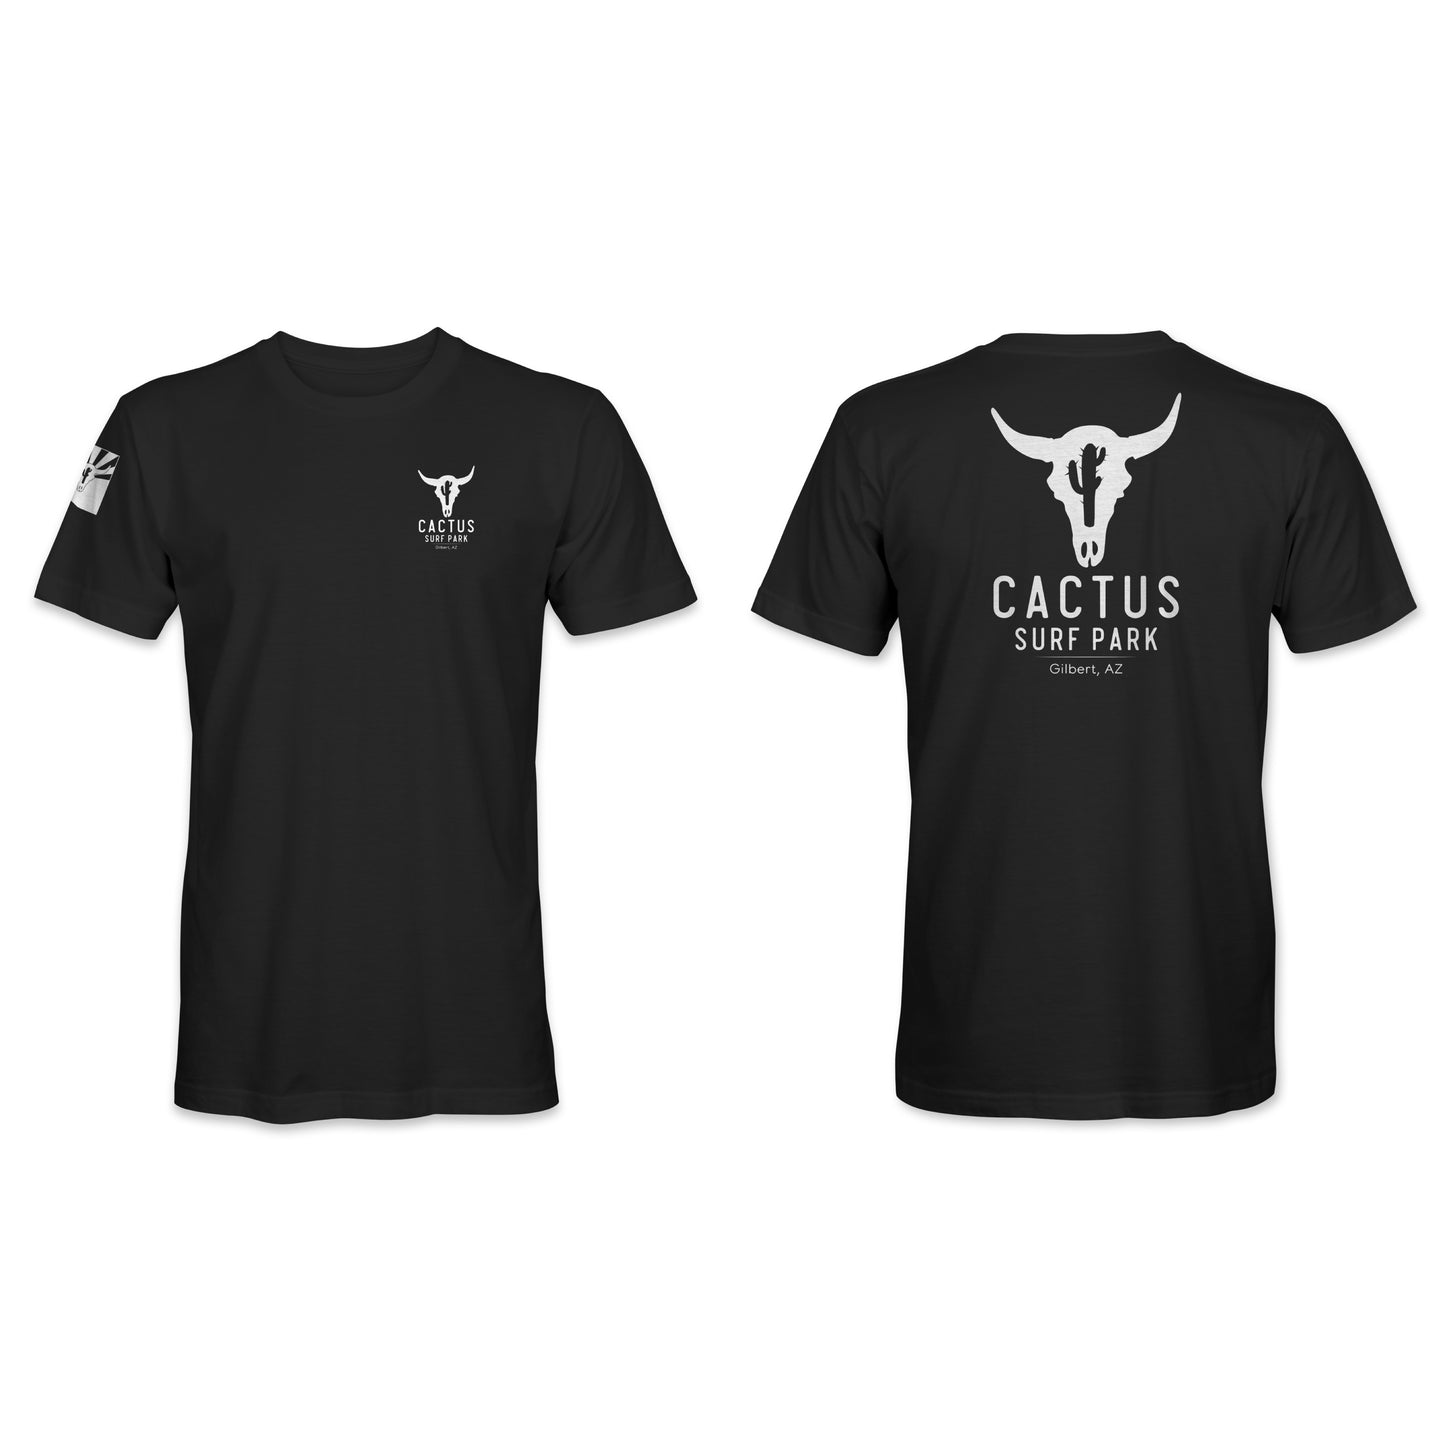 Cactus Surf Park ICON Men's & Youth S/S T-Shirt - Black / White